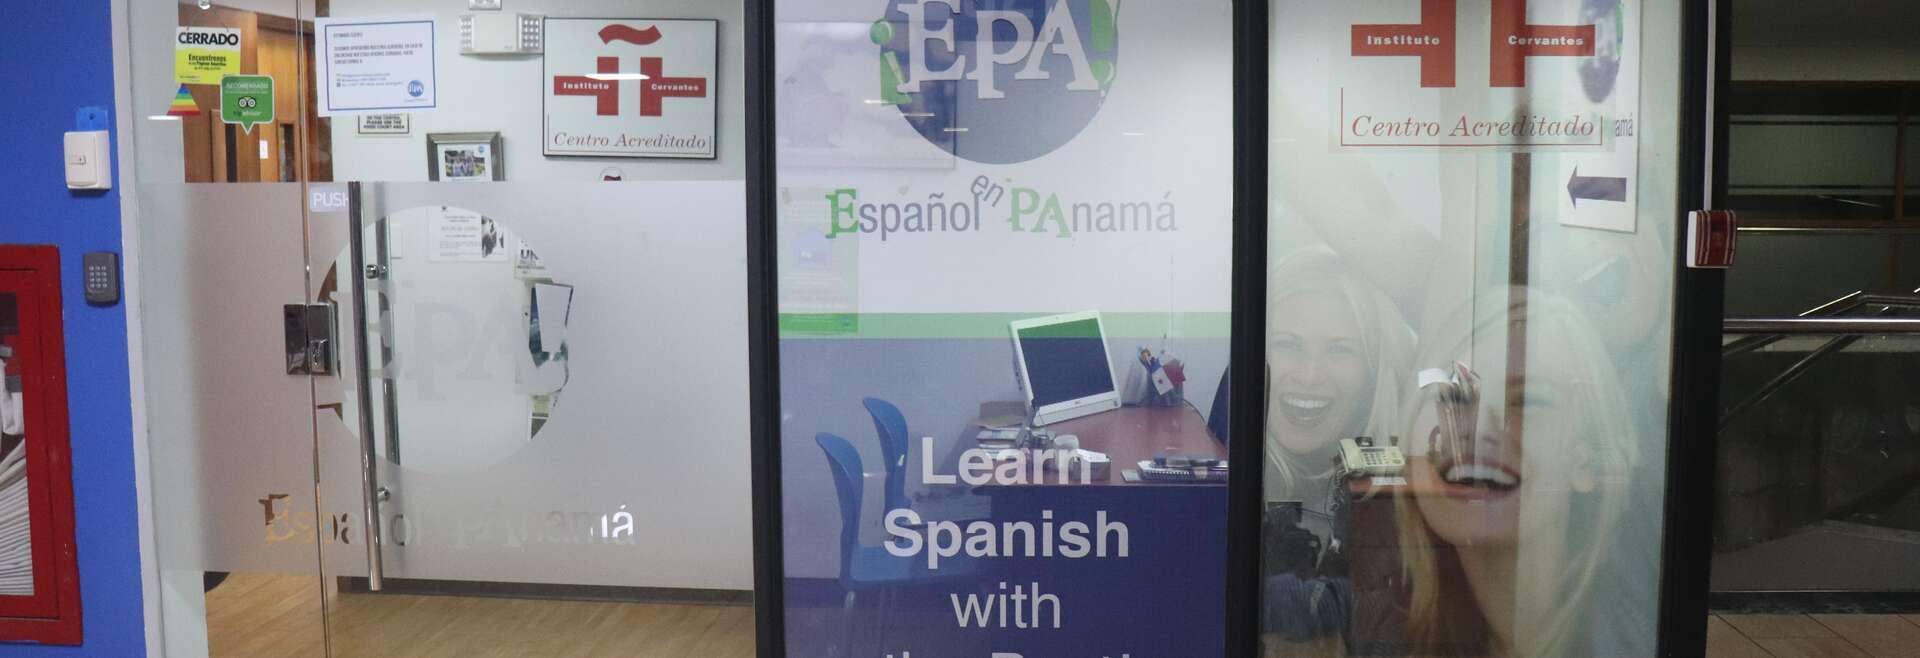 Sprachaufenthalt Panama, Panama City - Epaespañol en Panamá - Schule